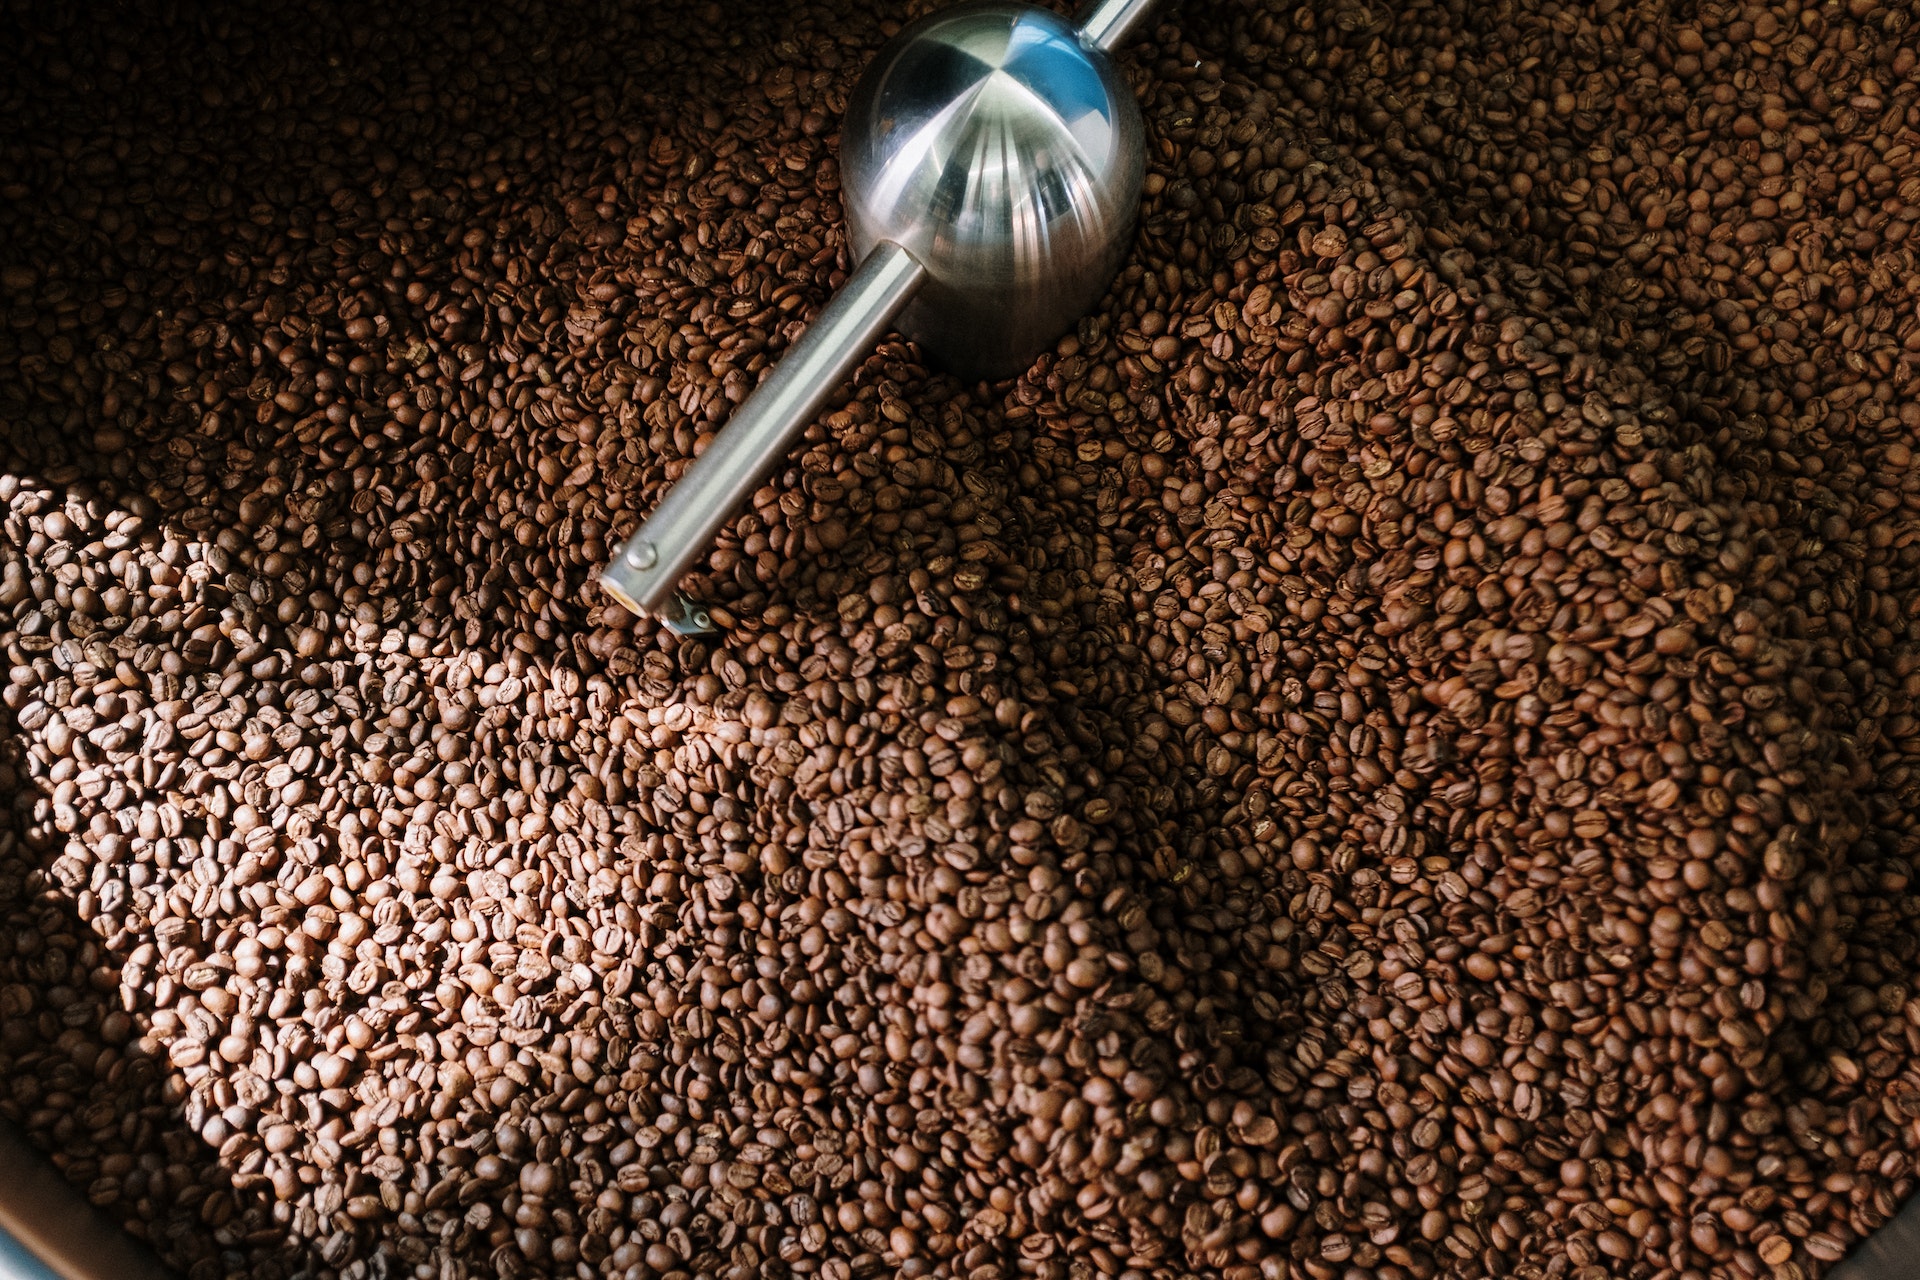 Roasting coffee beans mildly for vegan coffee